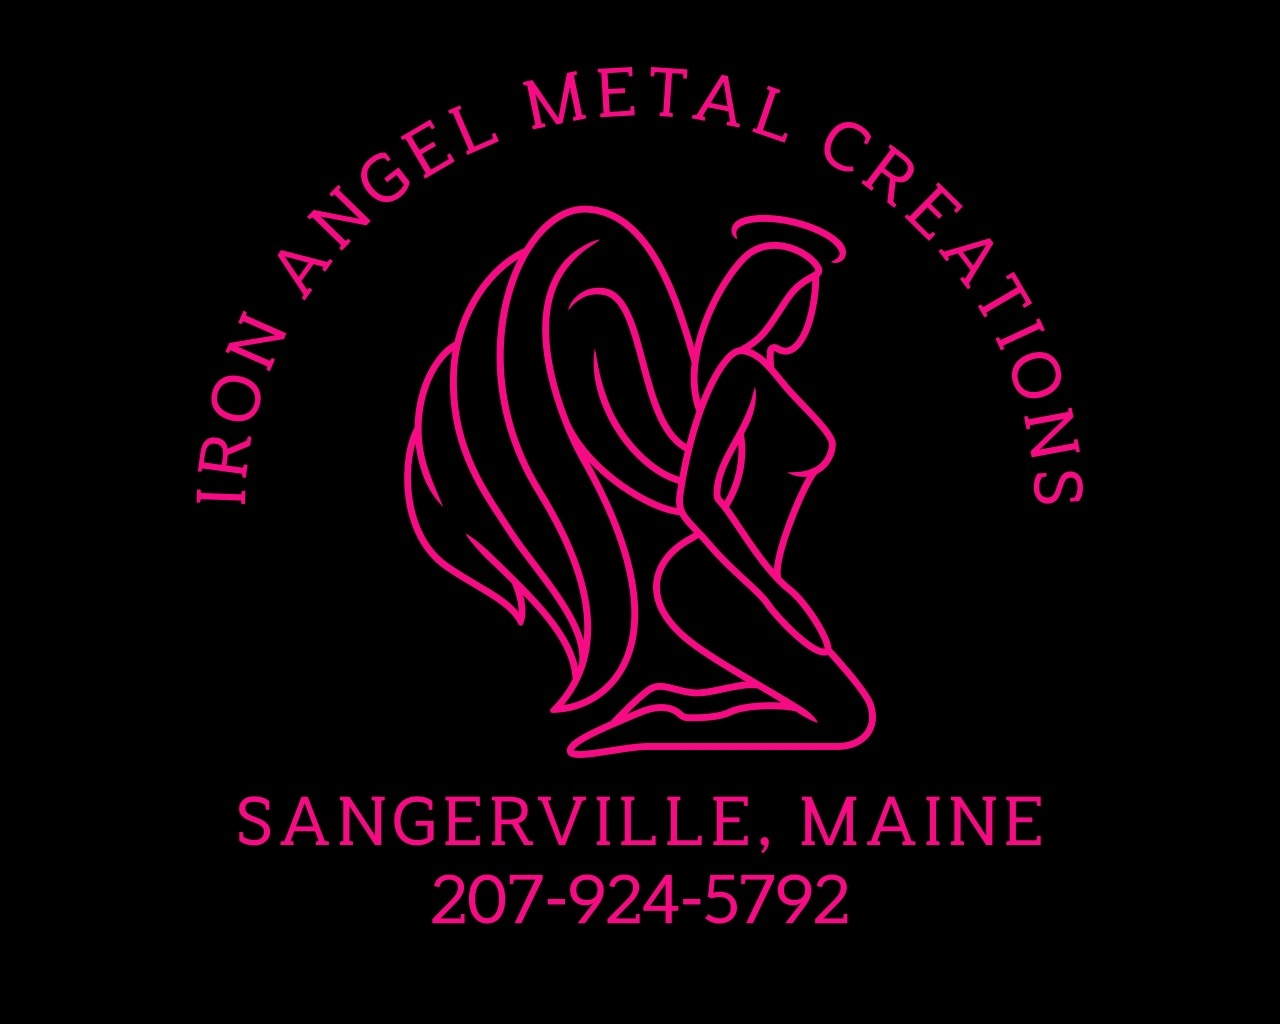 Iron Angel Metal Creations